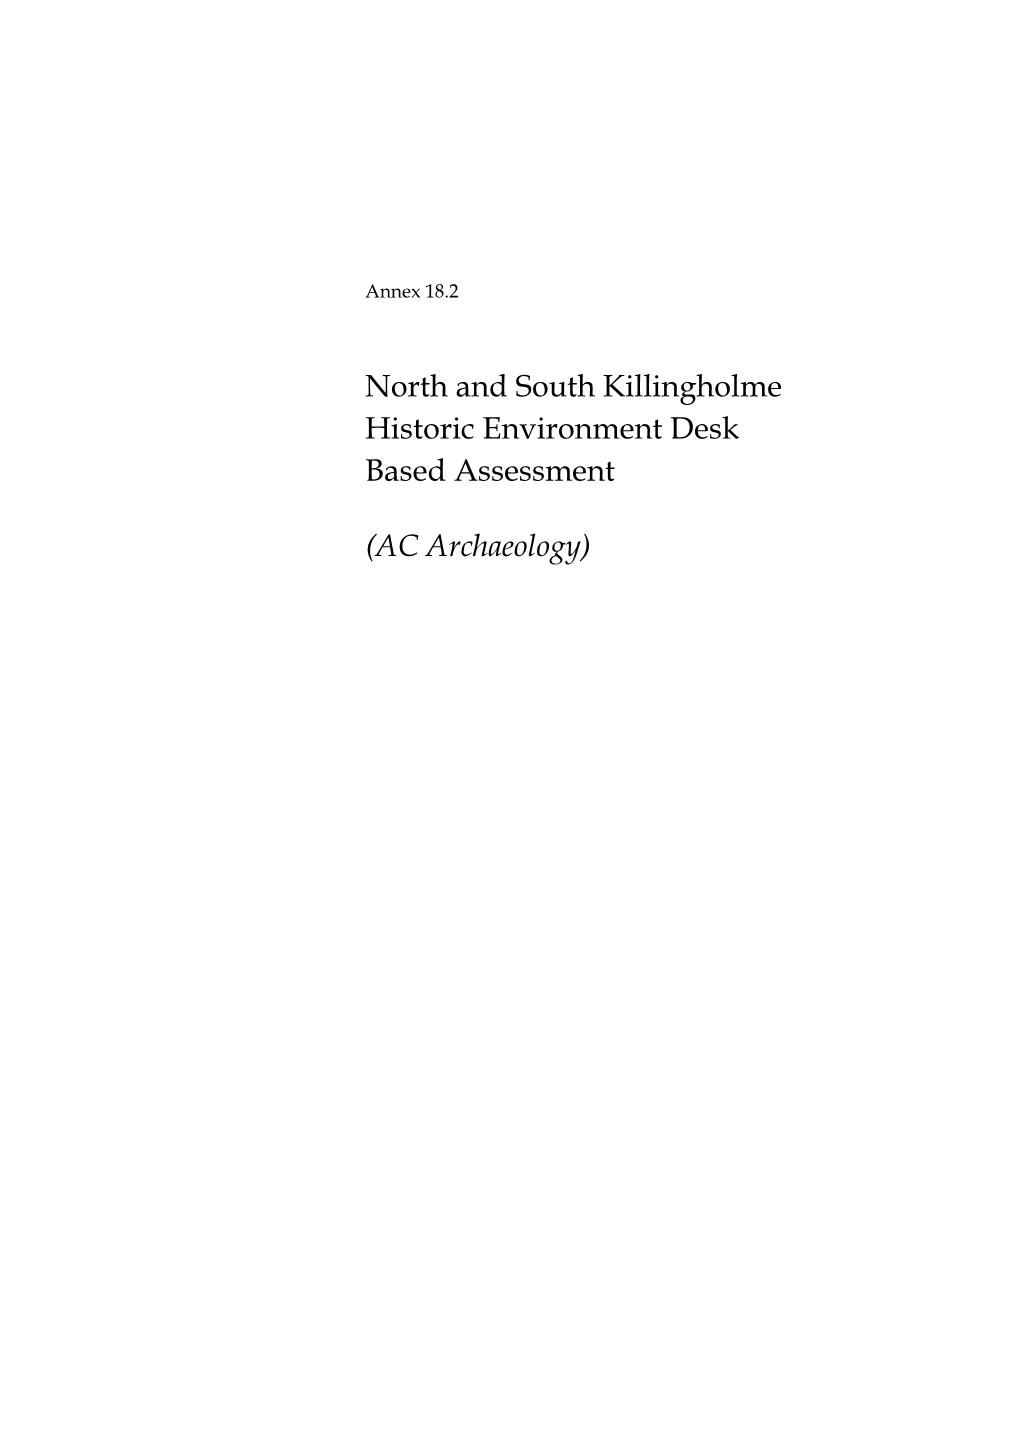 North and South Killingholme Historic Environment Desk Based Assessment